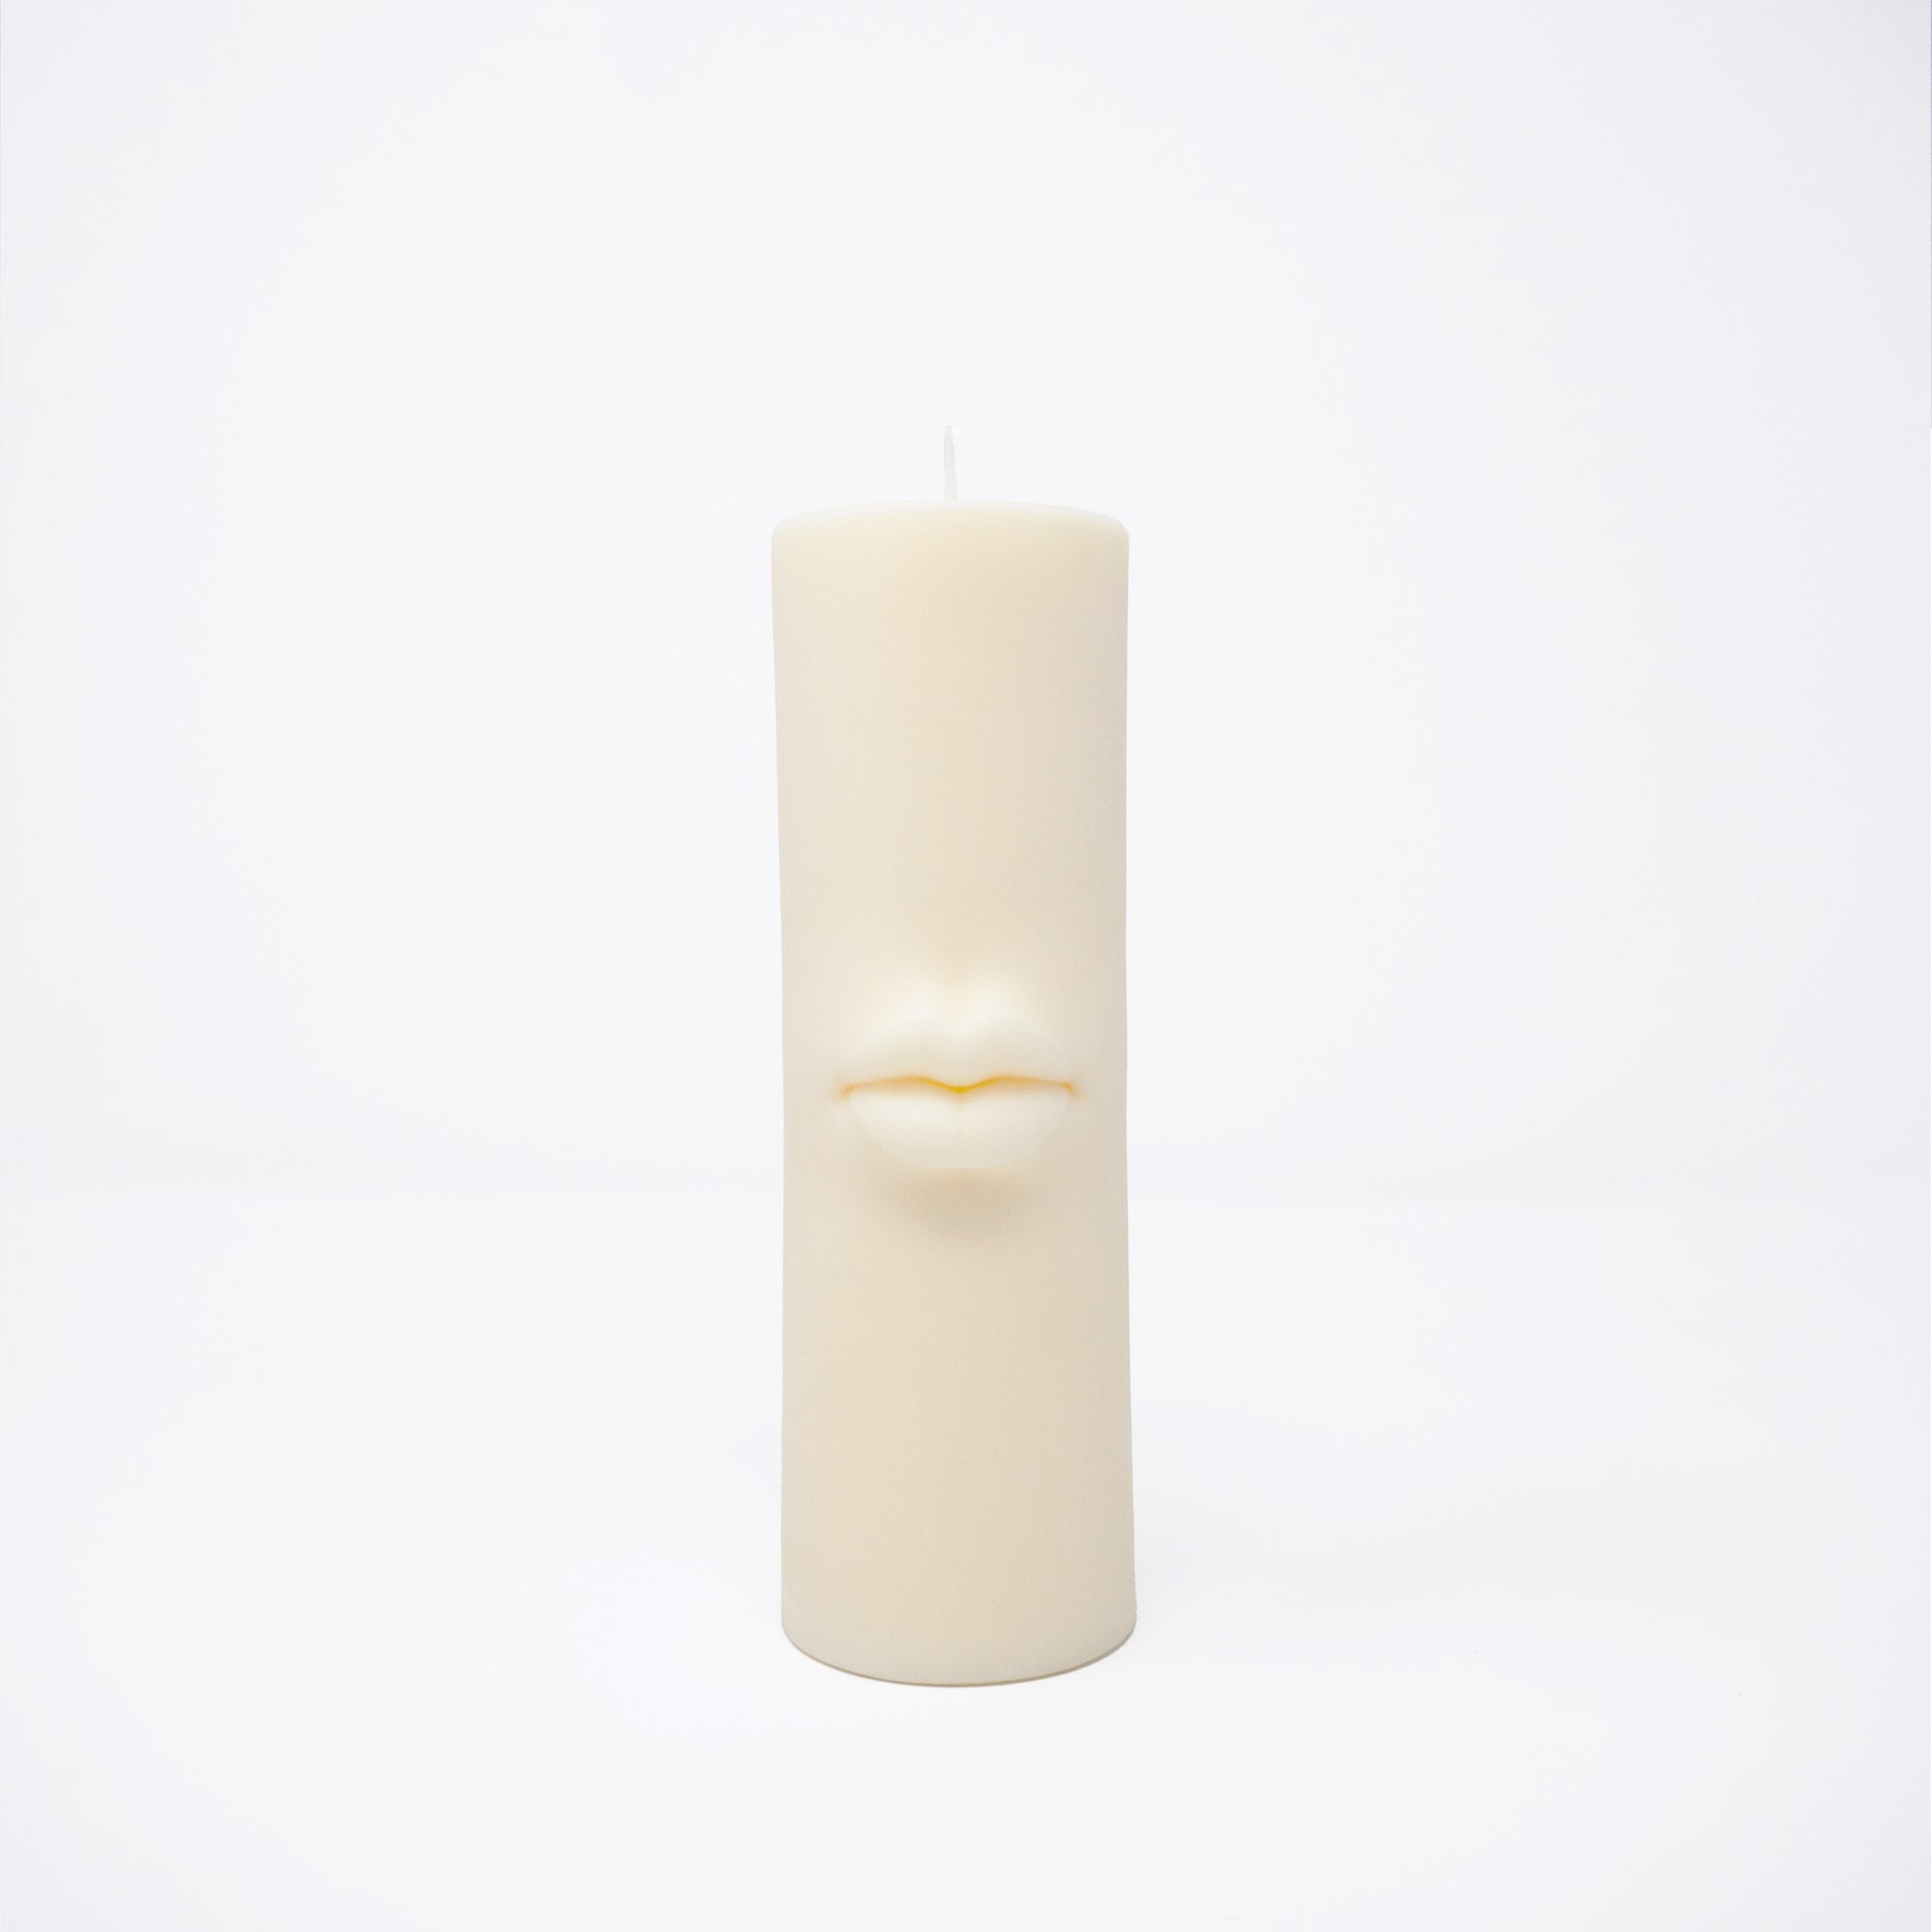 Lips Form Candle, white - Secret Location